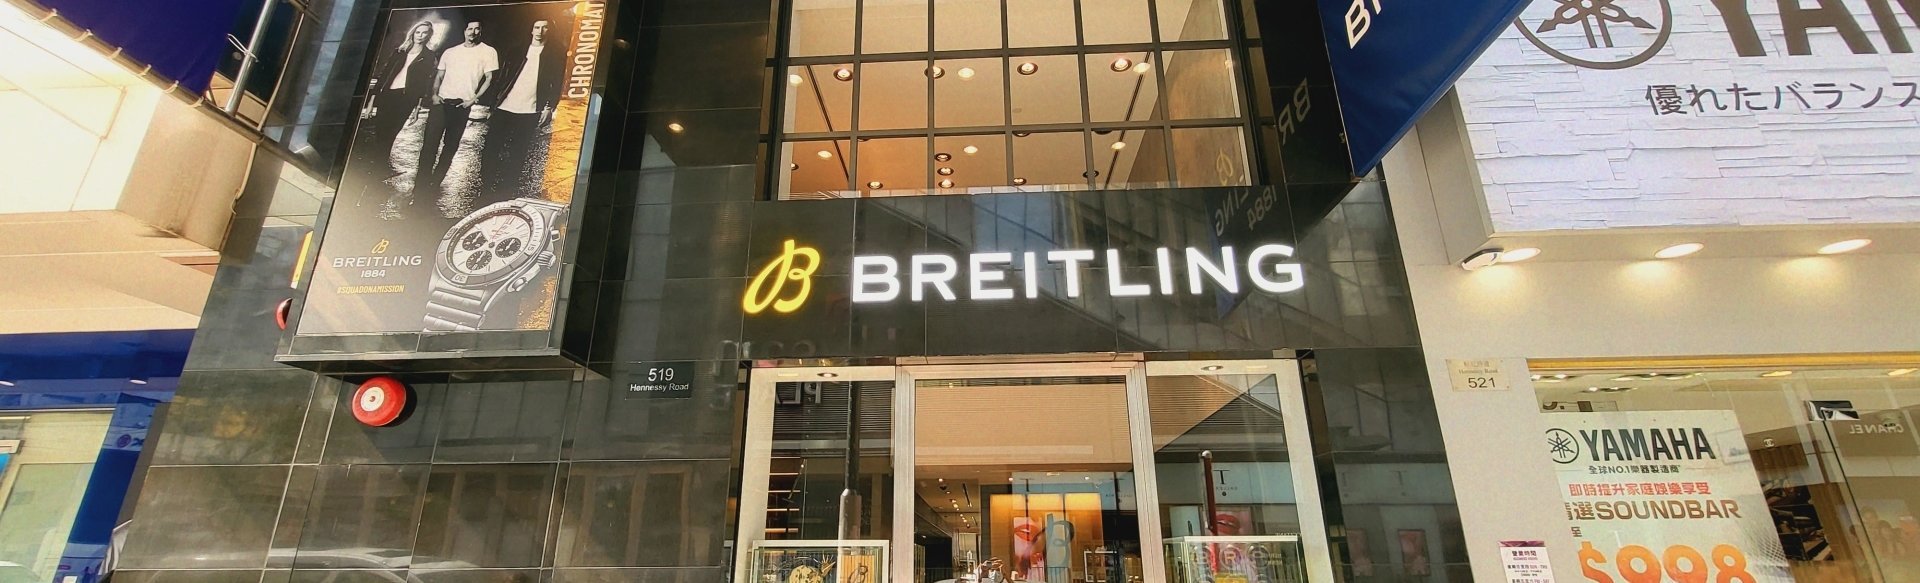 Breitling Boutique Hong Kong Causewaybay